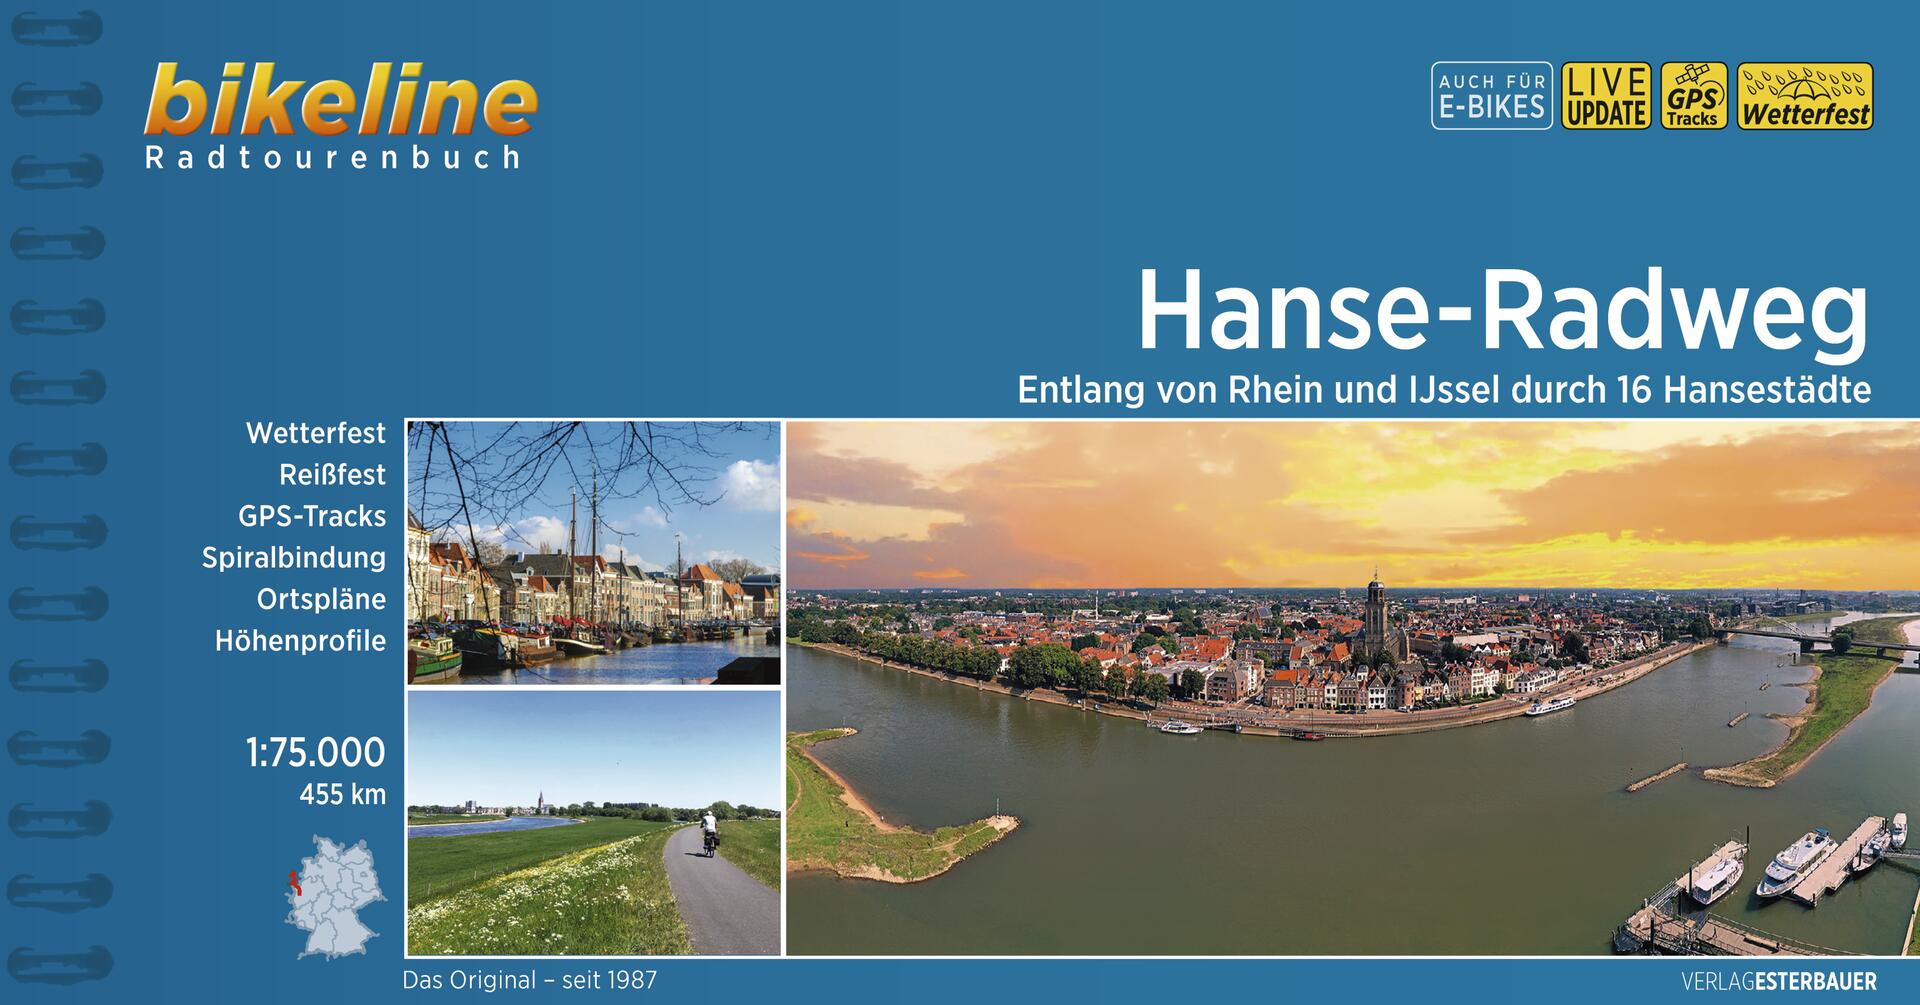 Hanse-Radweg - Bikeline Radtourenbuch